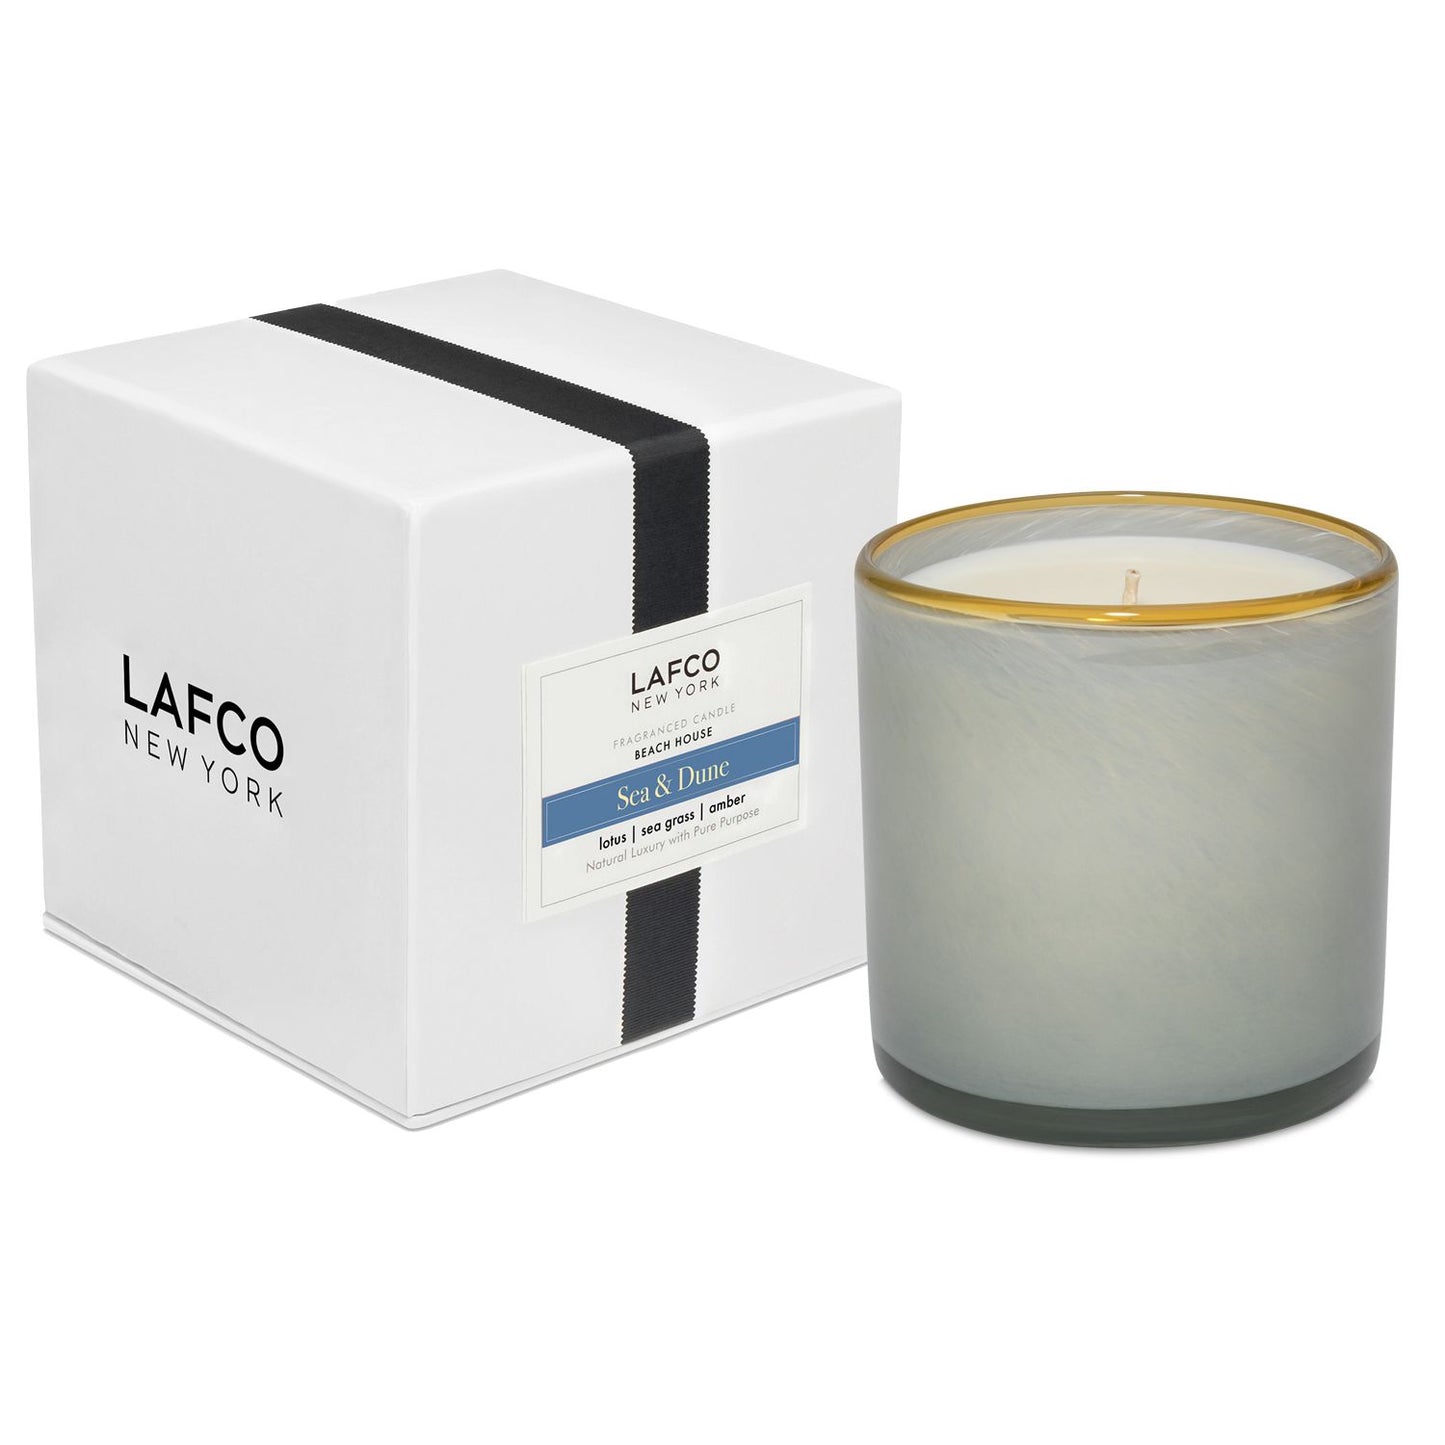 Lafco 15.5oz Candle